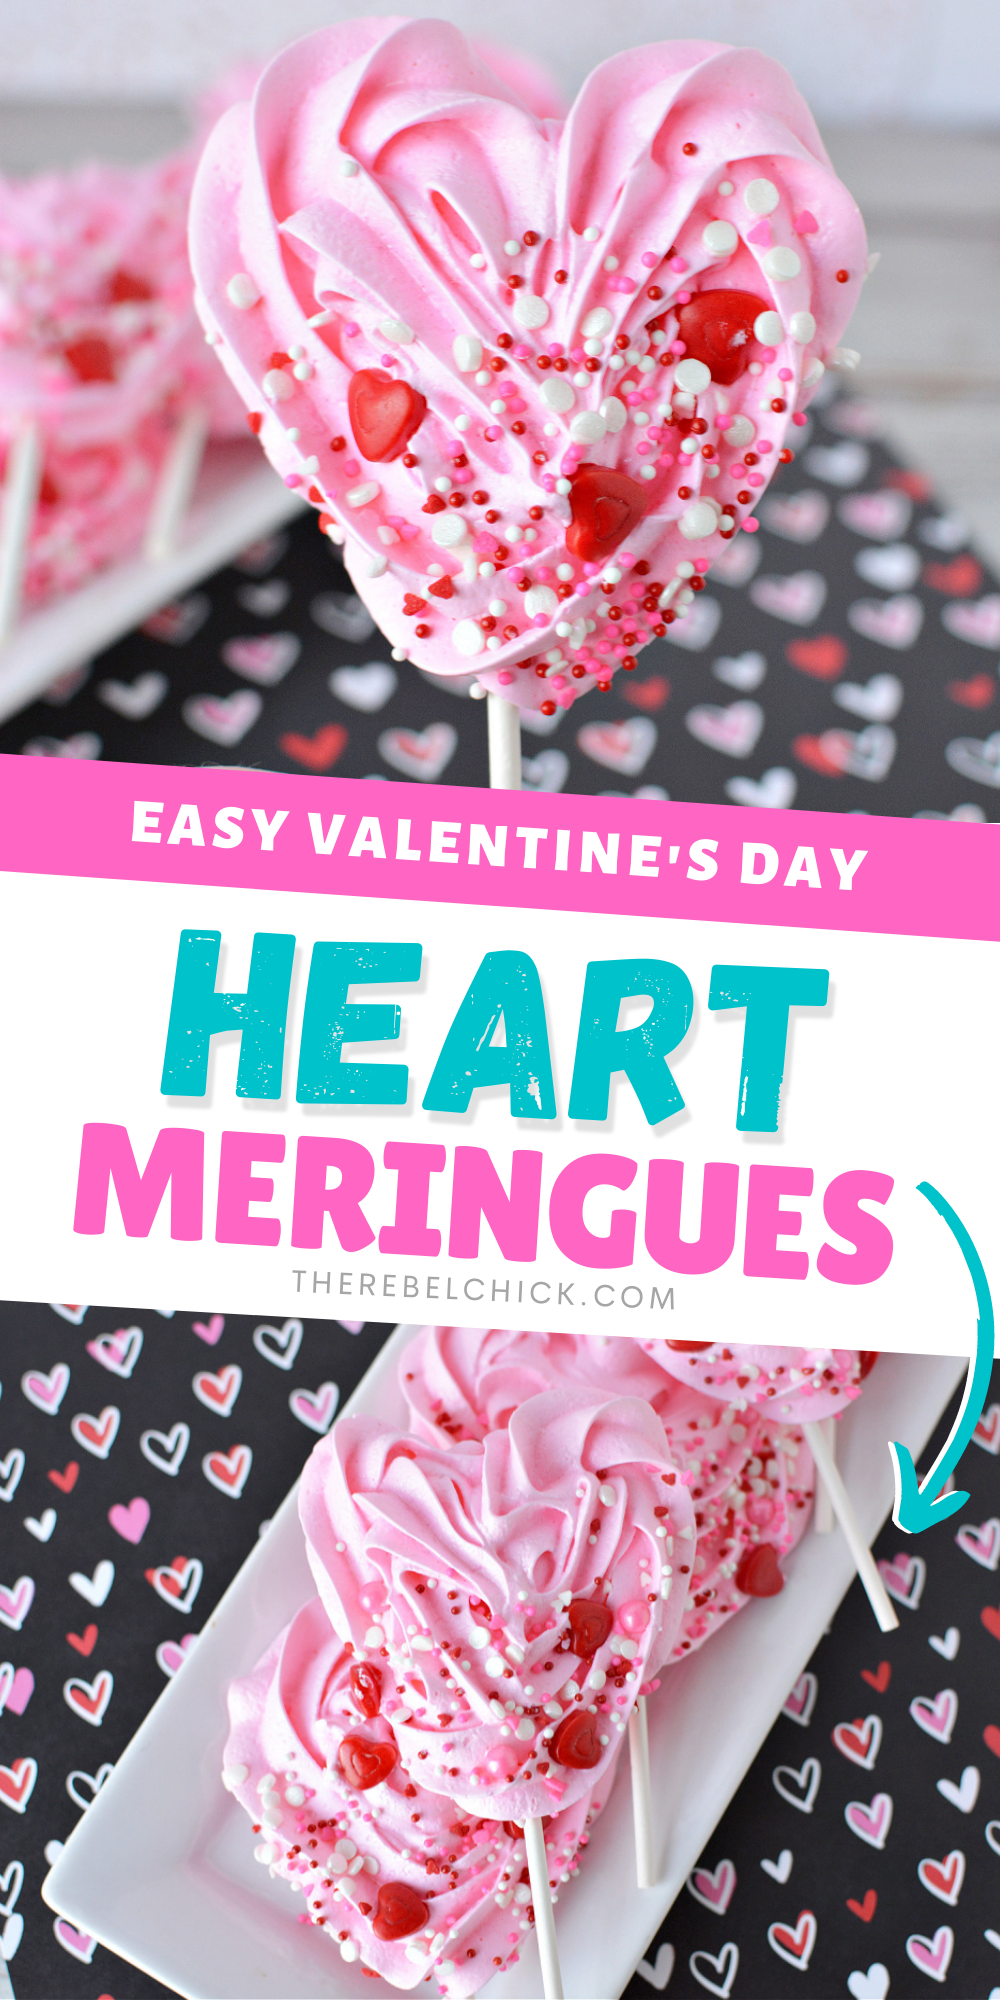 How to Make Heart Meringues Recipe #helpingcookies